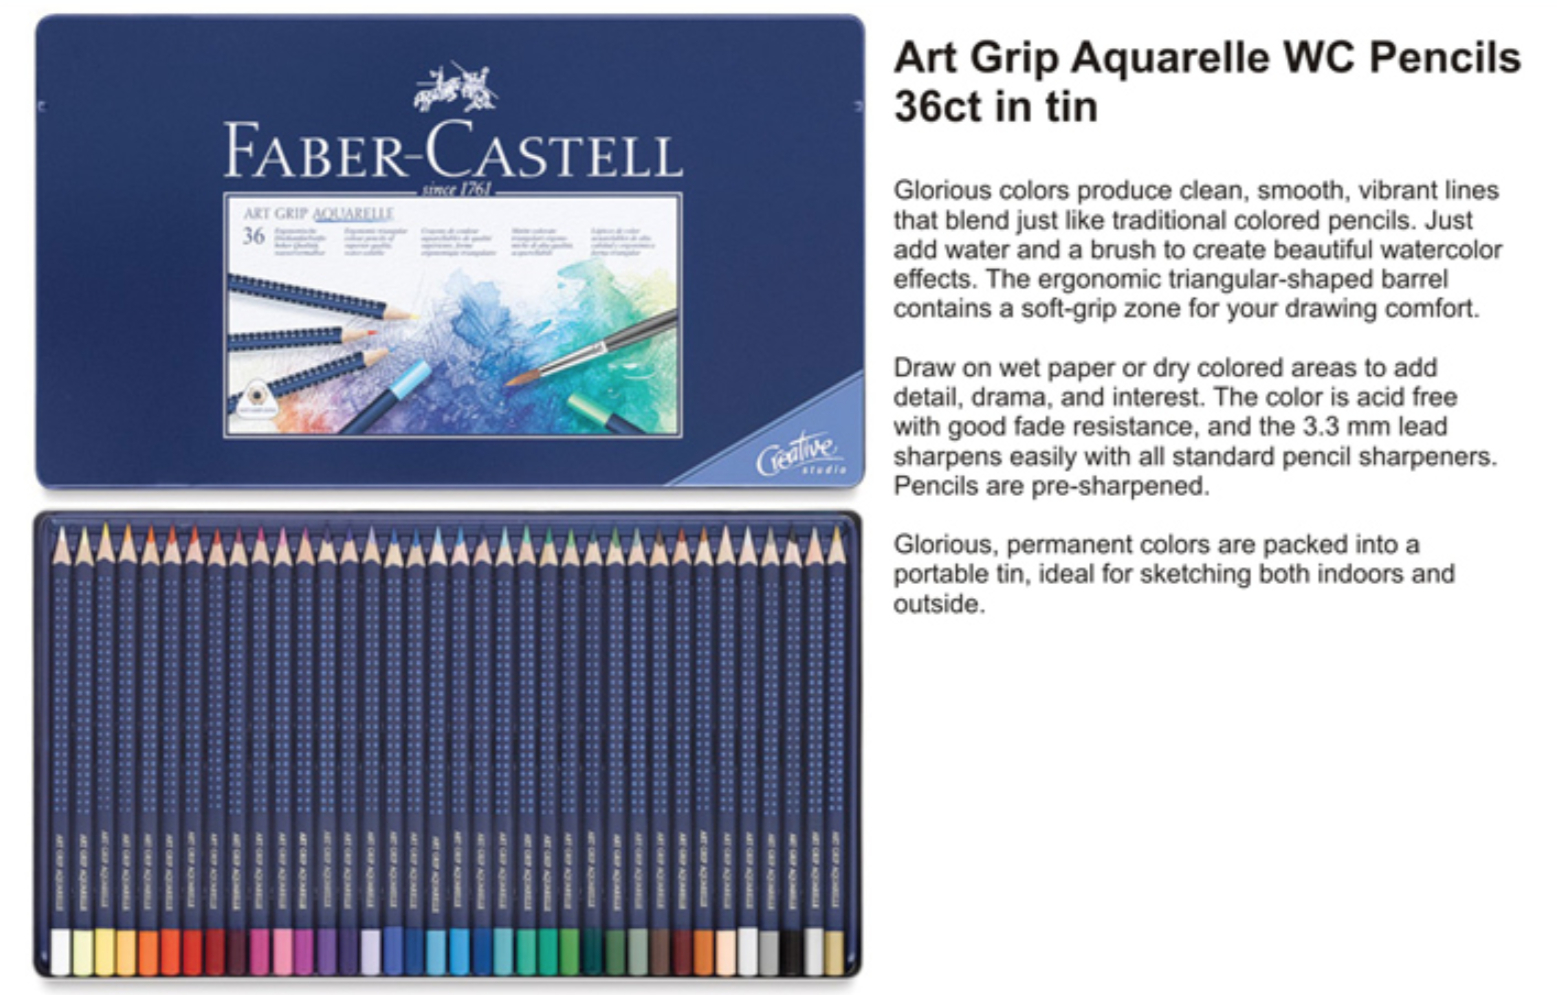 Faber Castell X 36 Kunst Grip Aquarell Bleistifte Stift Farbe verwandt mit Faber Castell Art Grip Aquarelle 36